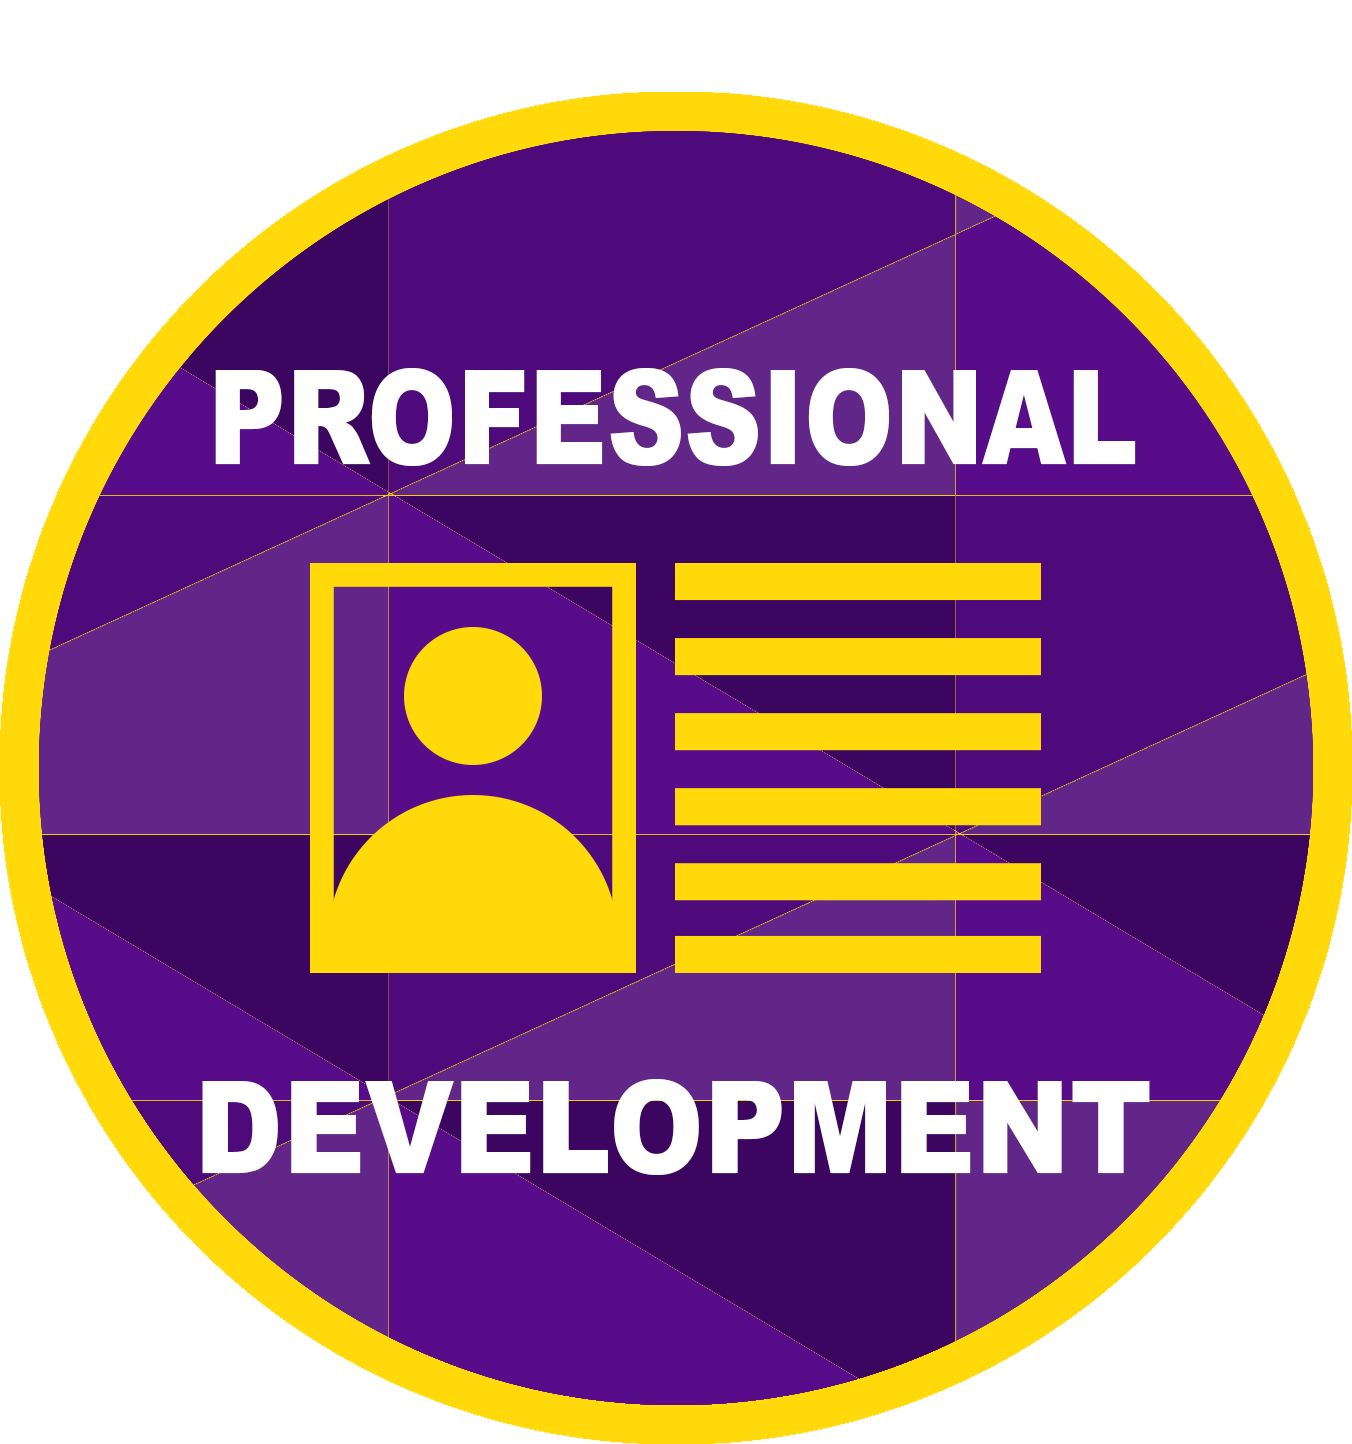 Professional Development Badge